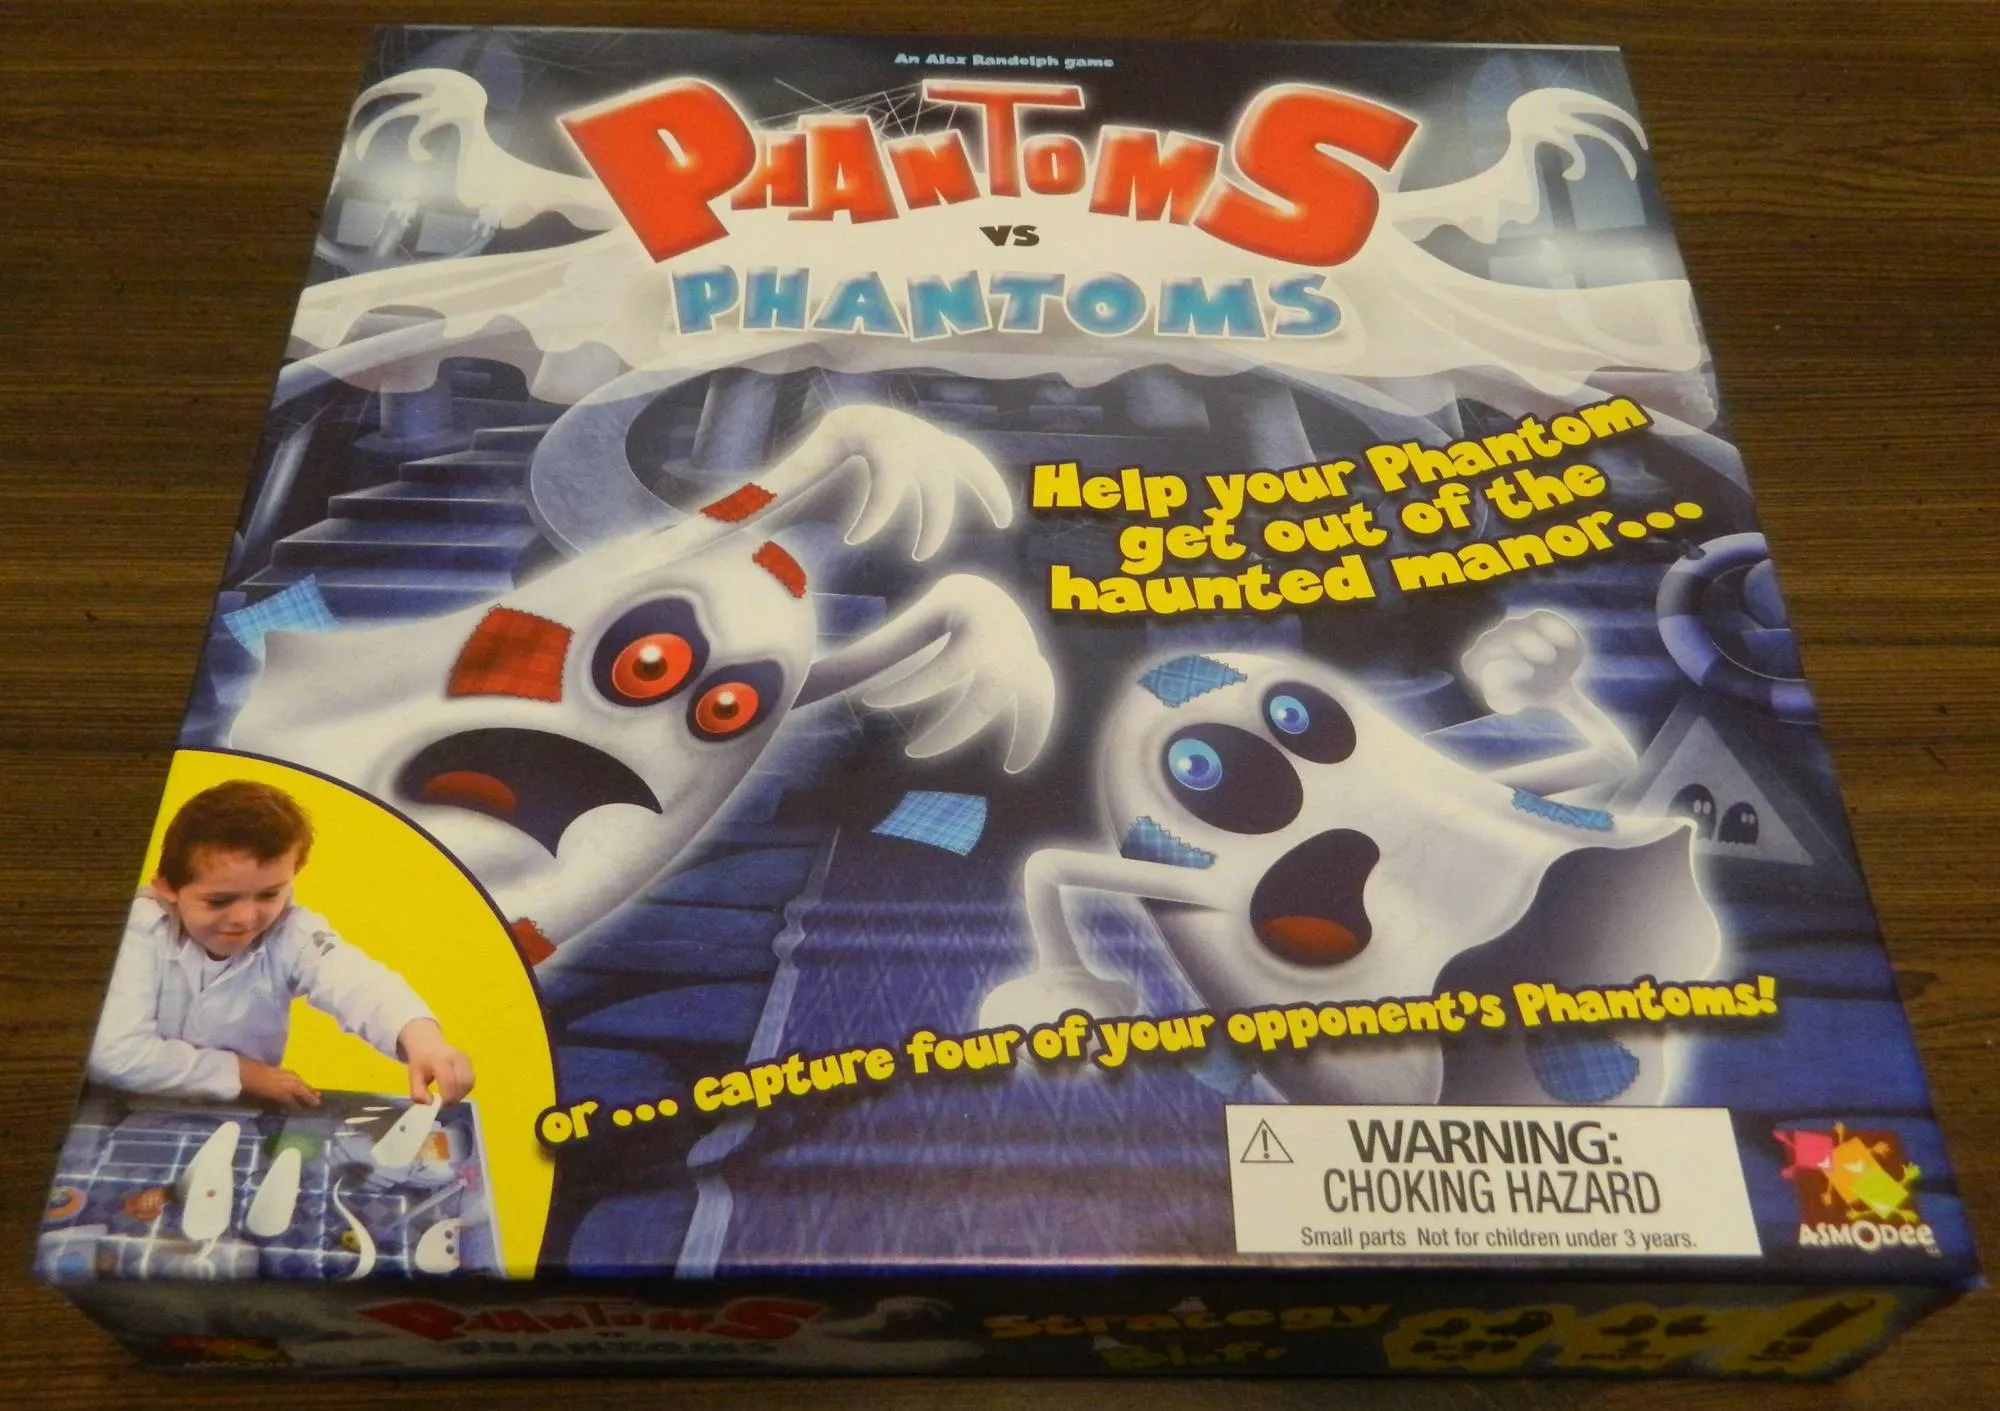 Box for Phantoms vs Phantoms